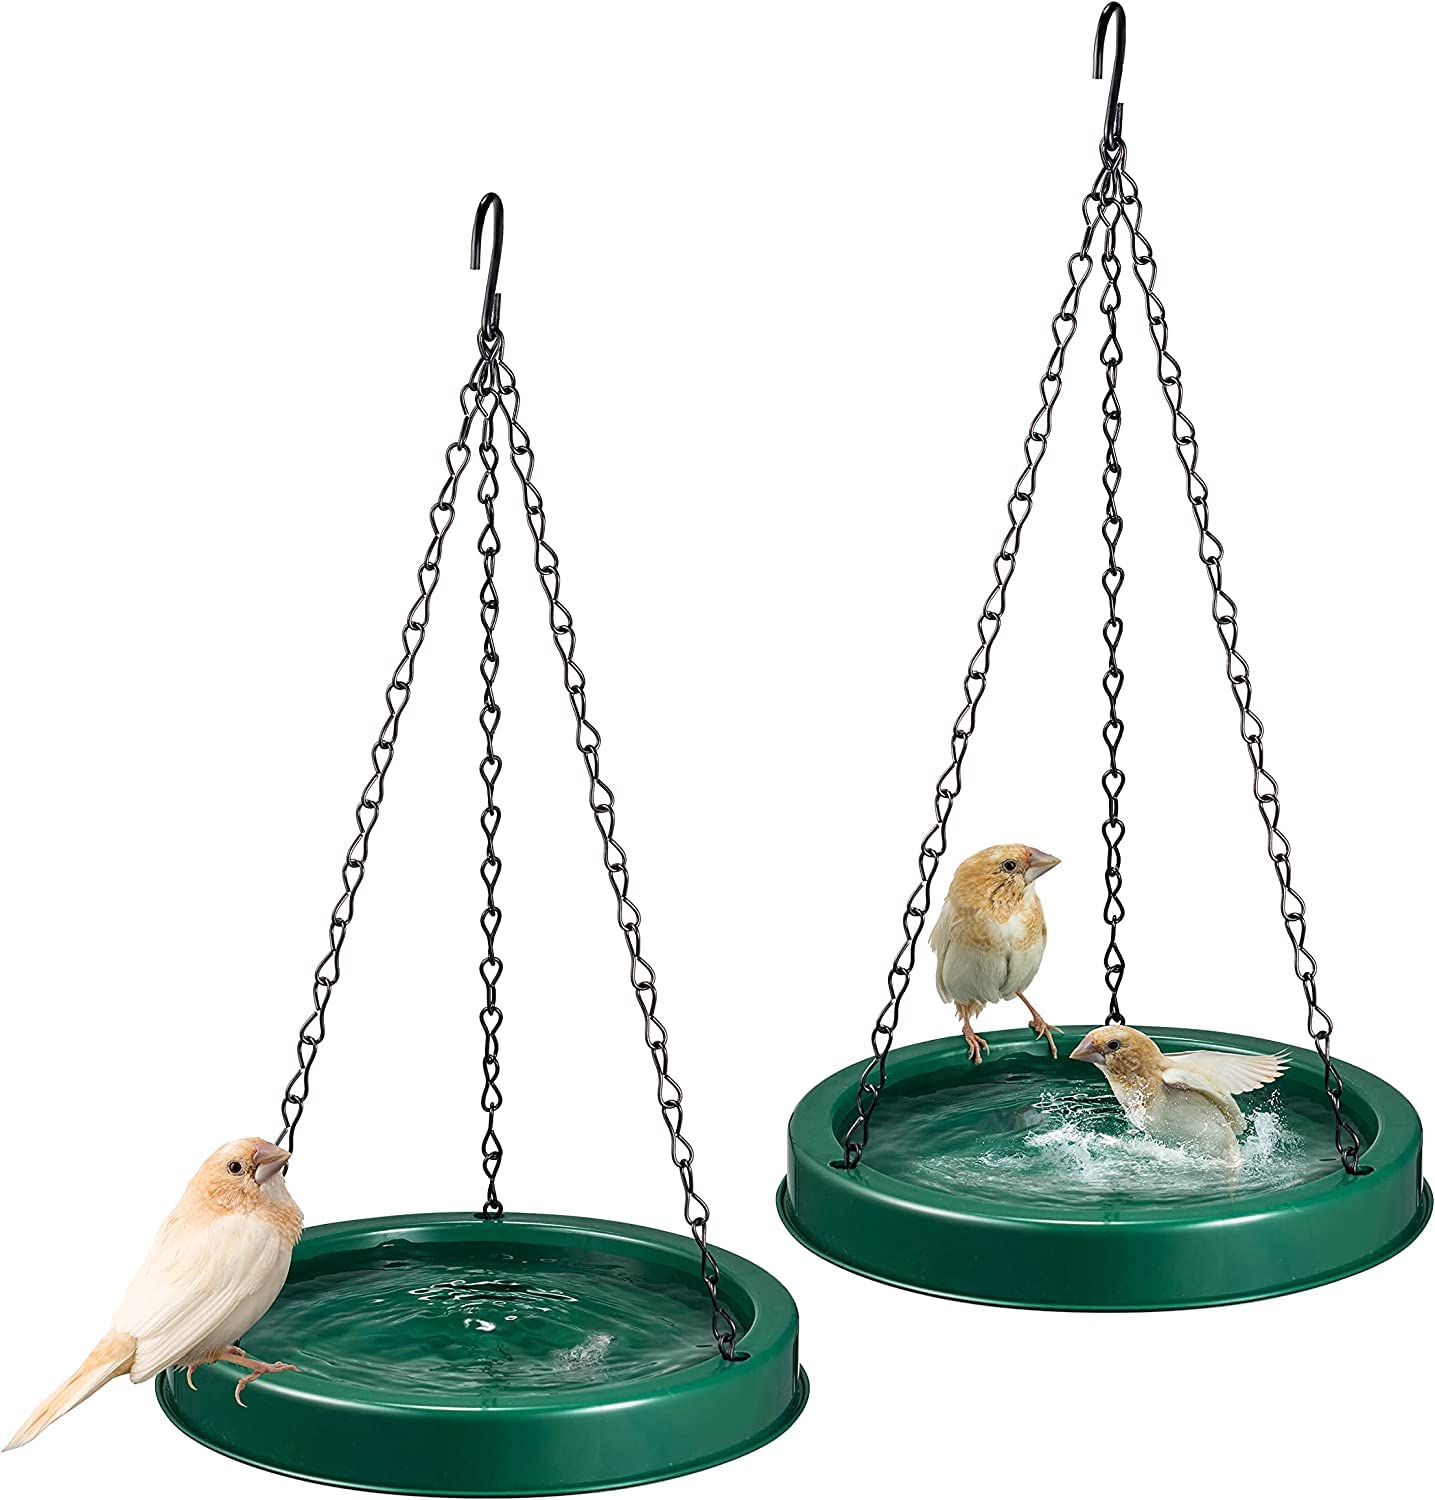 Plastic Bird Bath Tray & Feeder 20 oz [Set of 2] Hanging Bird Baths for Outdoors & Indoors, Bird Water Feeder with Circular Perch - Small Bird Bath 17-Inch Round Design and Lightweight (Green)  - Like New